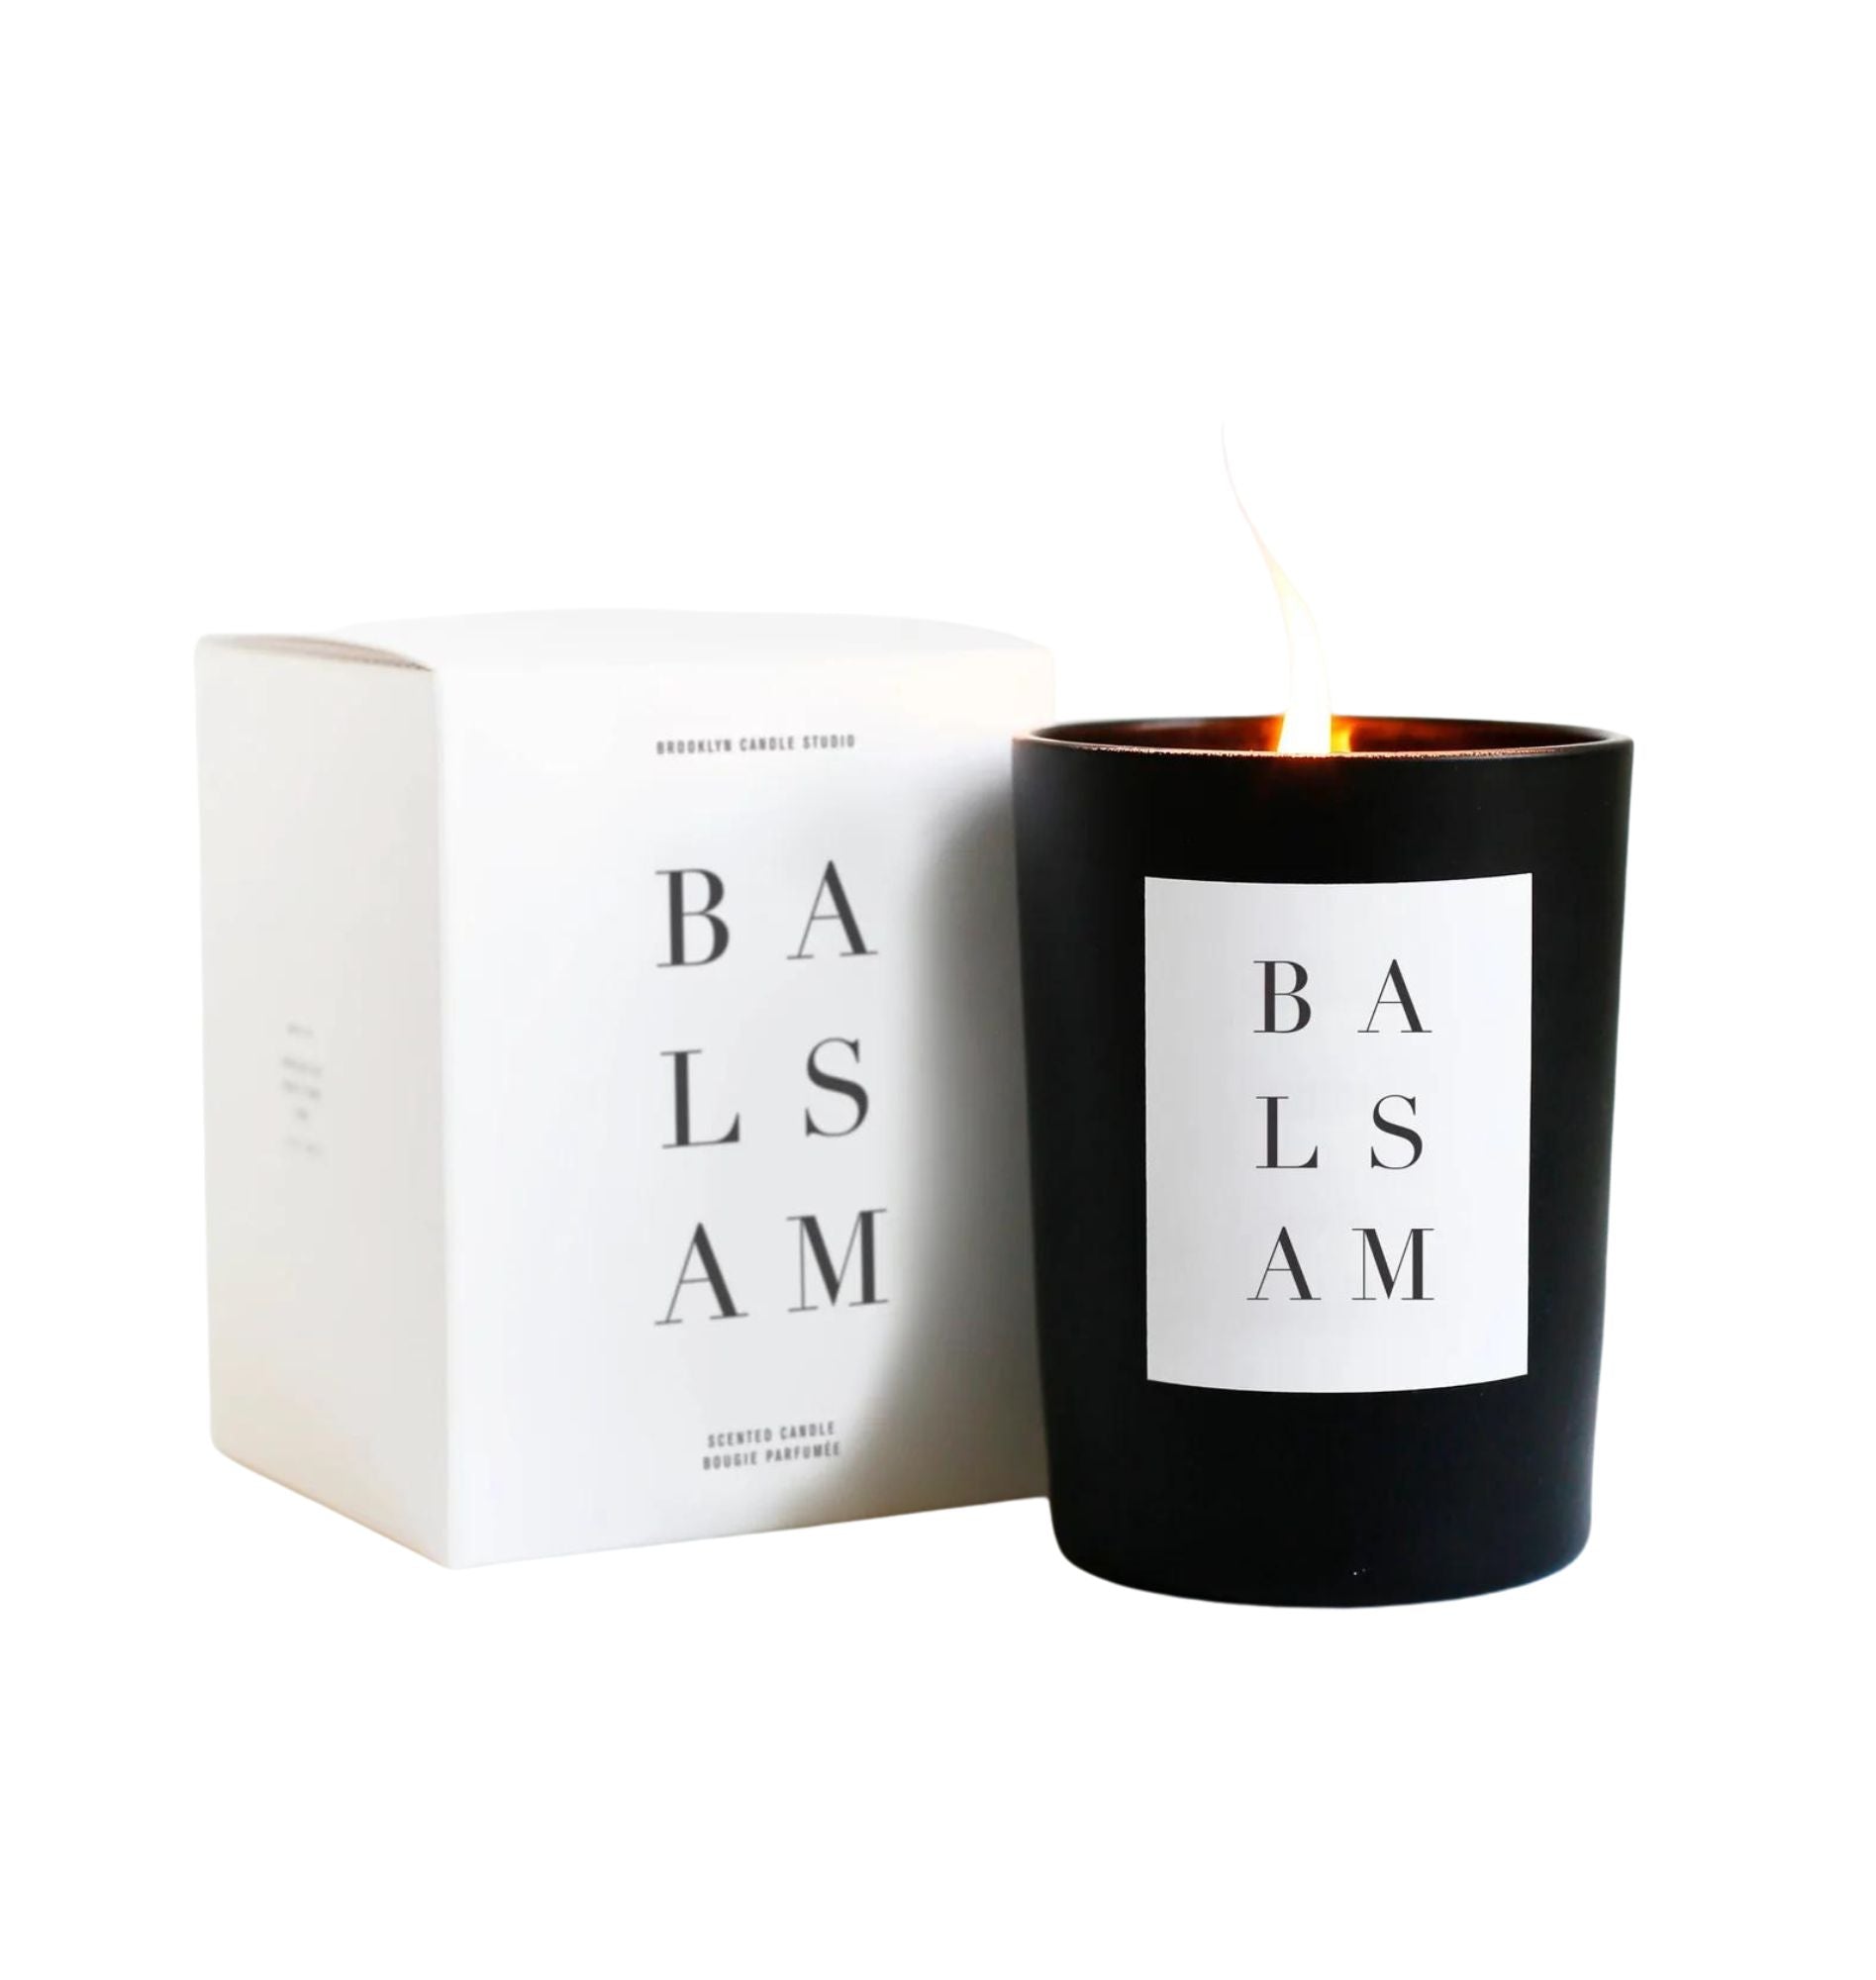 Balsam Noir Candle